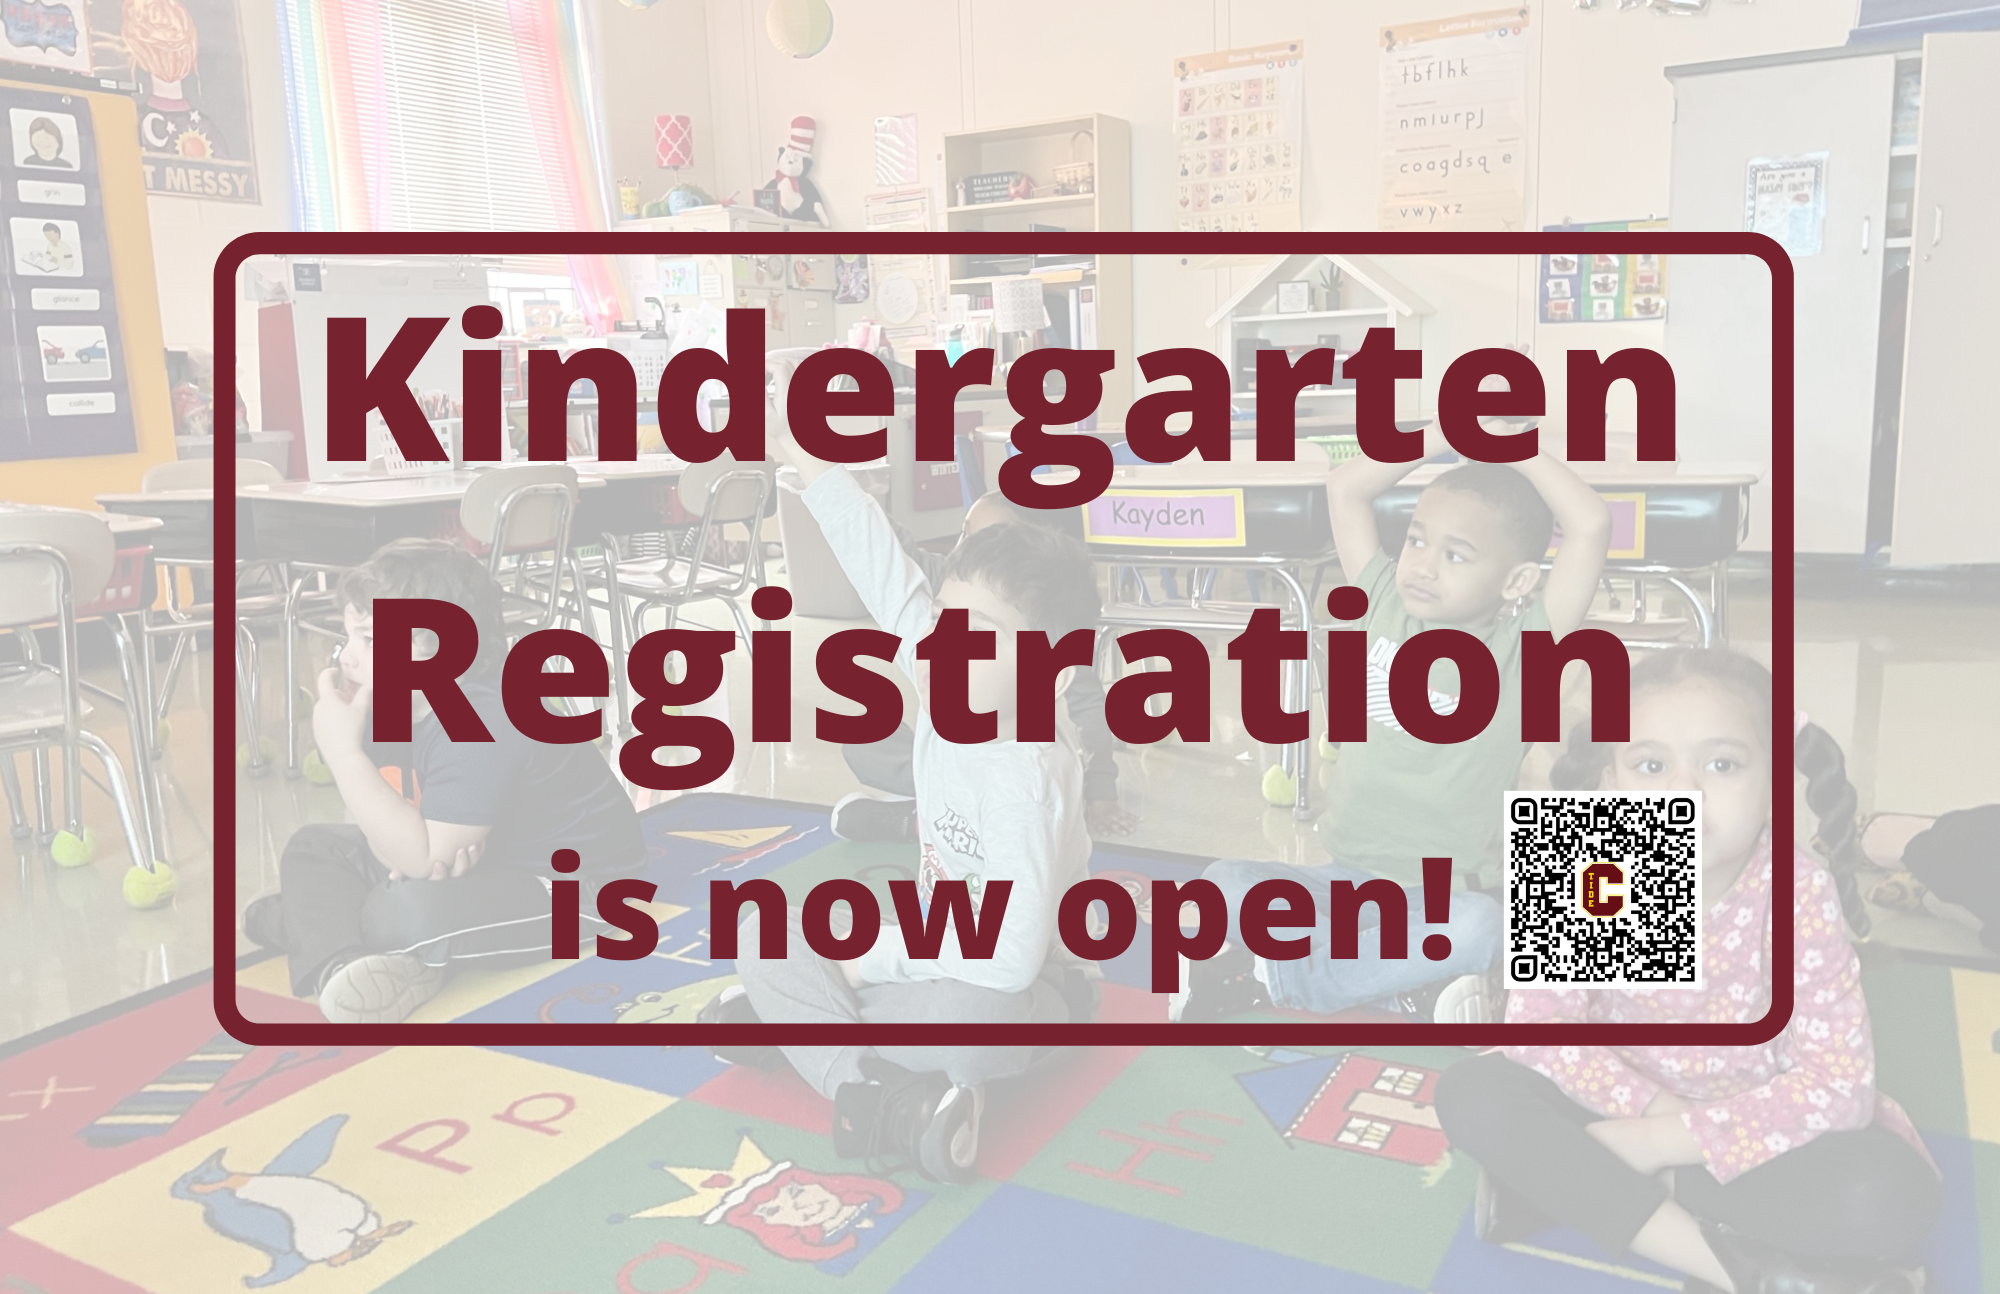 Kindergarten Registration is now open with pic of kindergarten student in the background and qr code